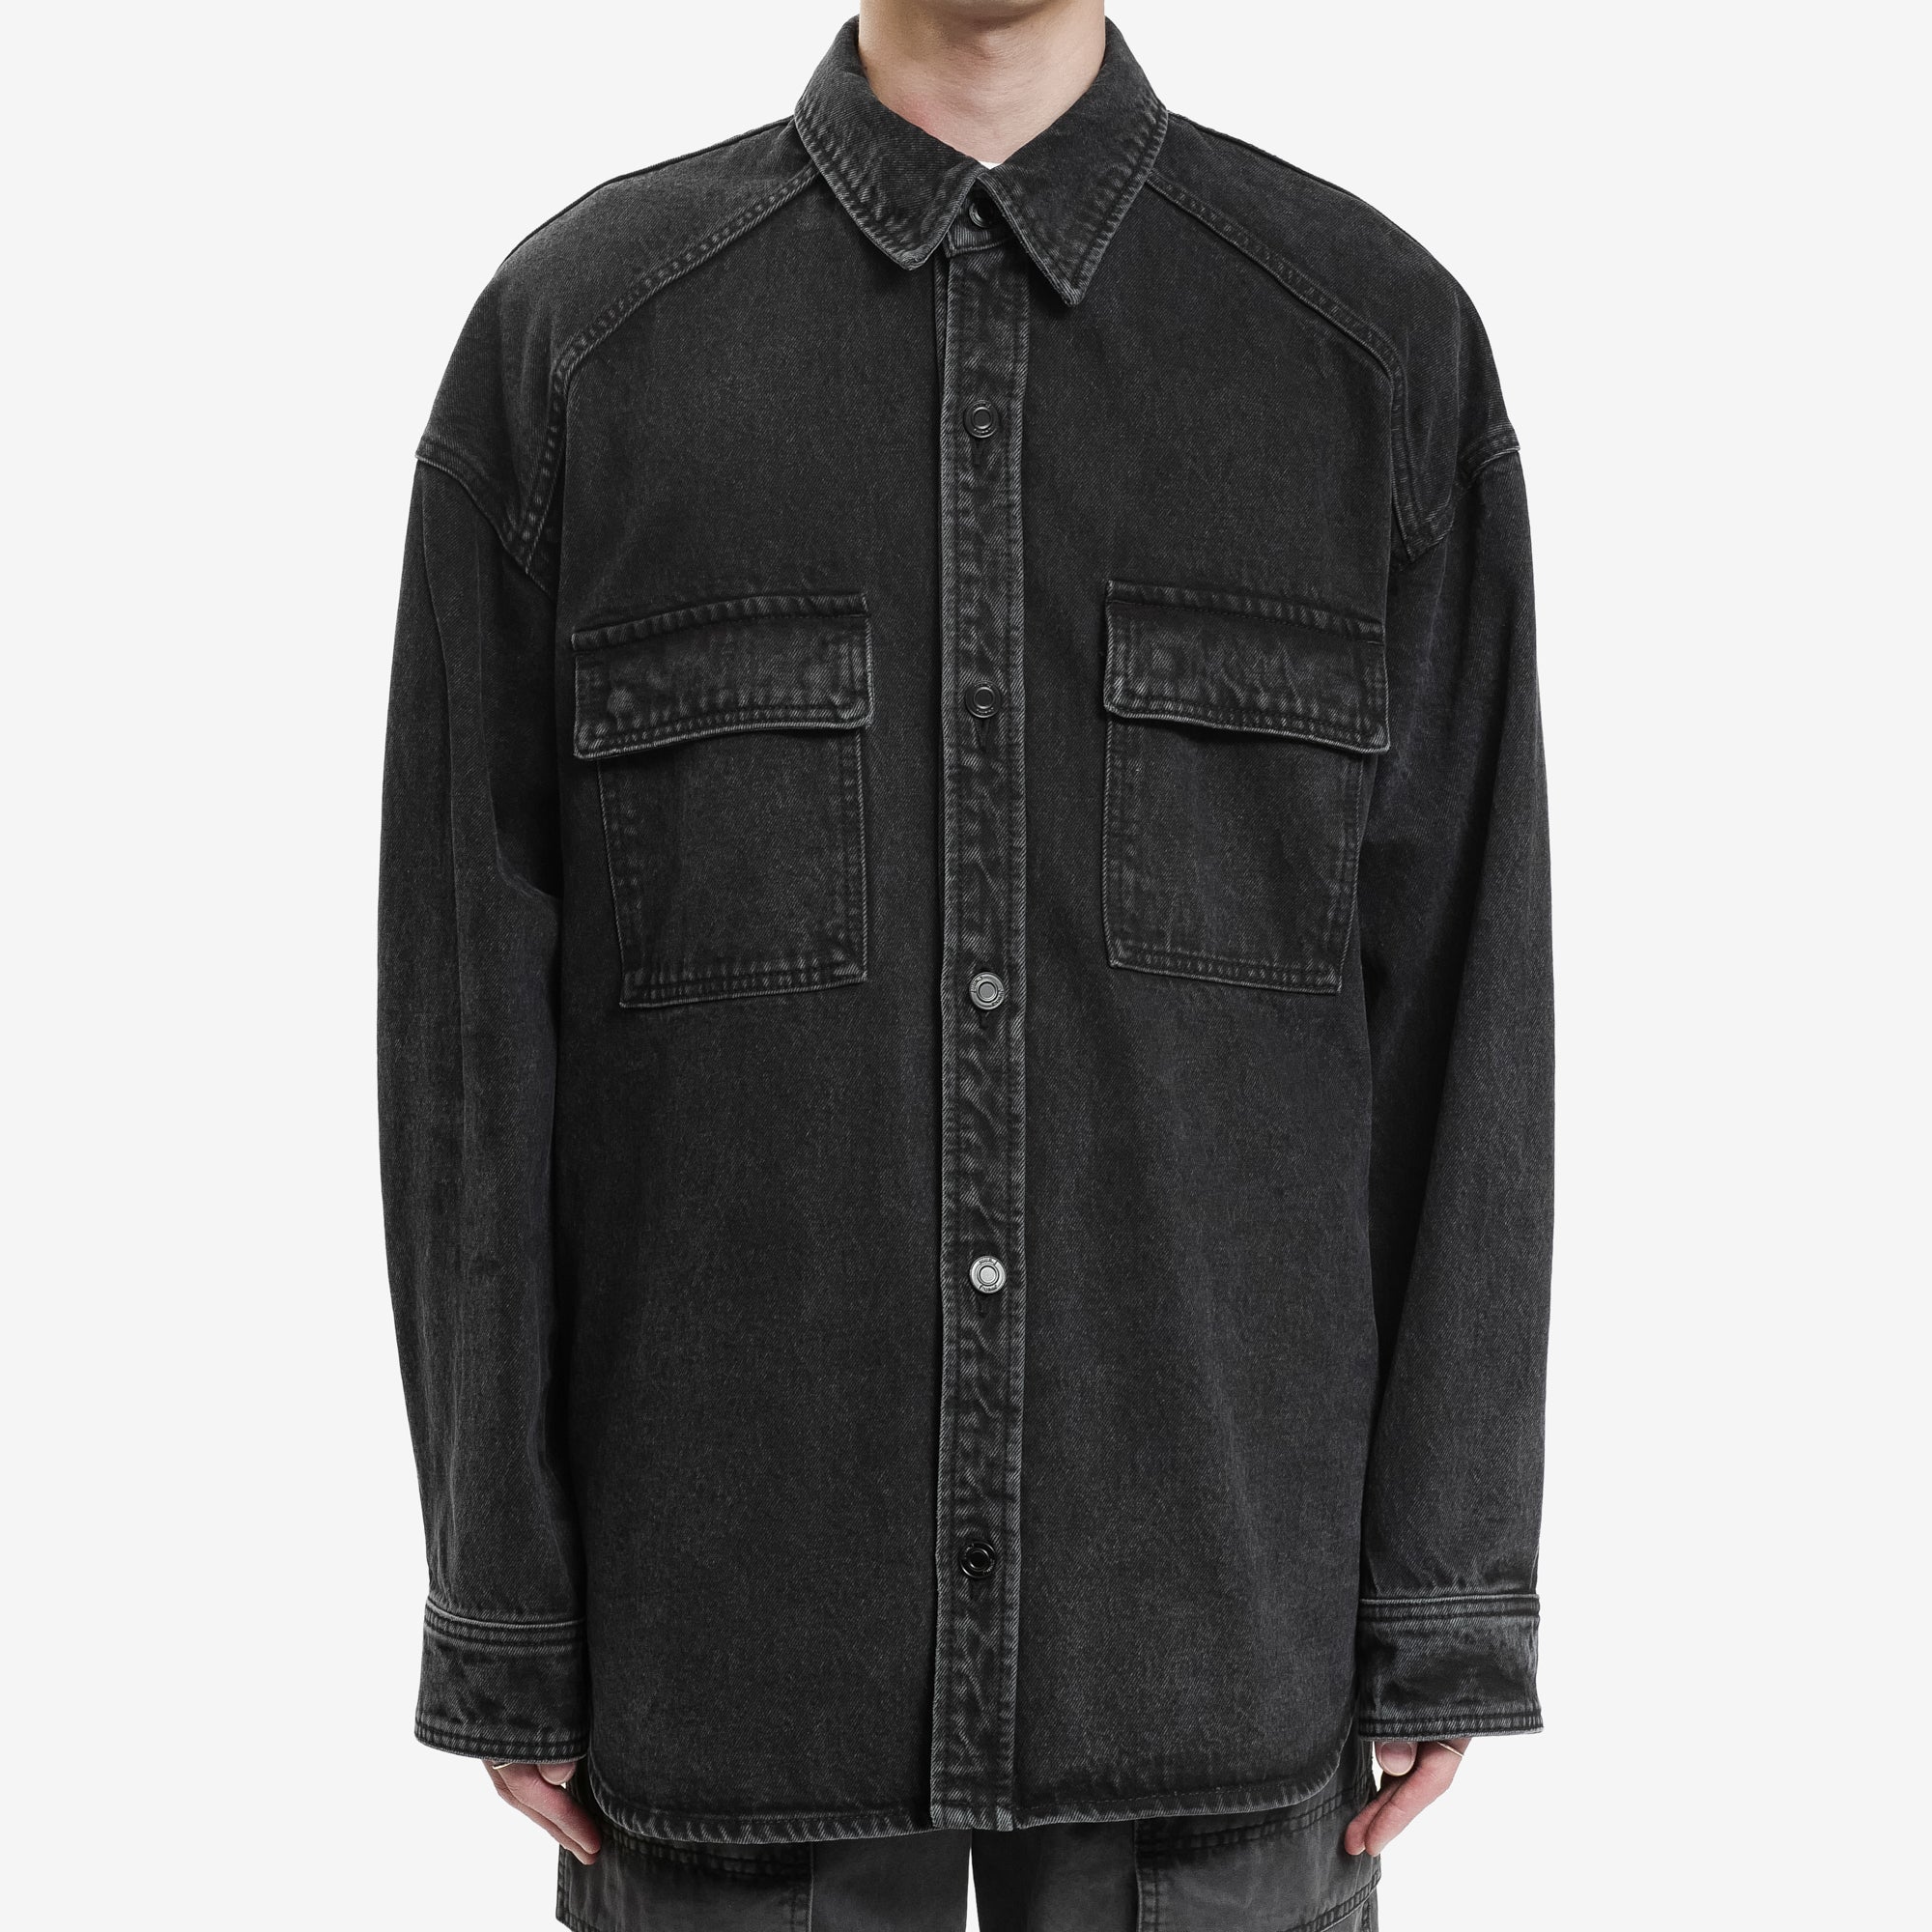 LANI'S General Store  Chirimen Rayon Open-collared Shirts Black